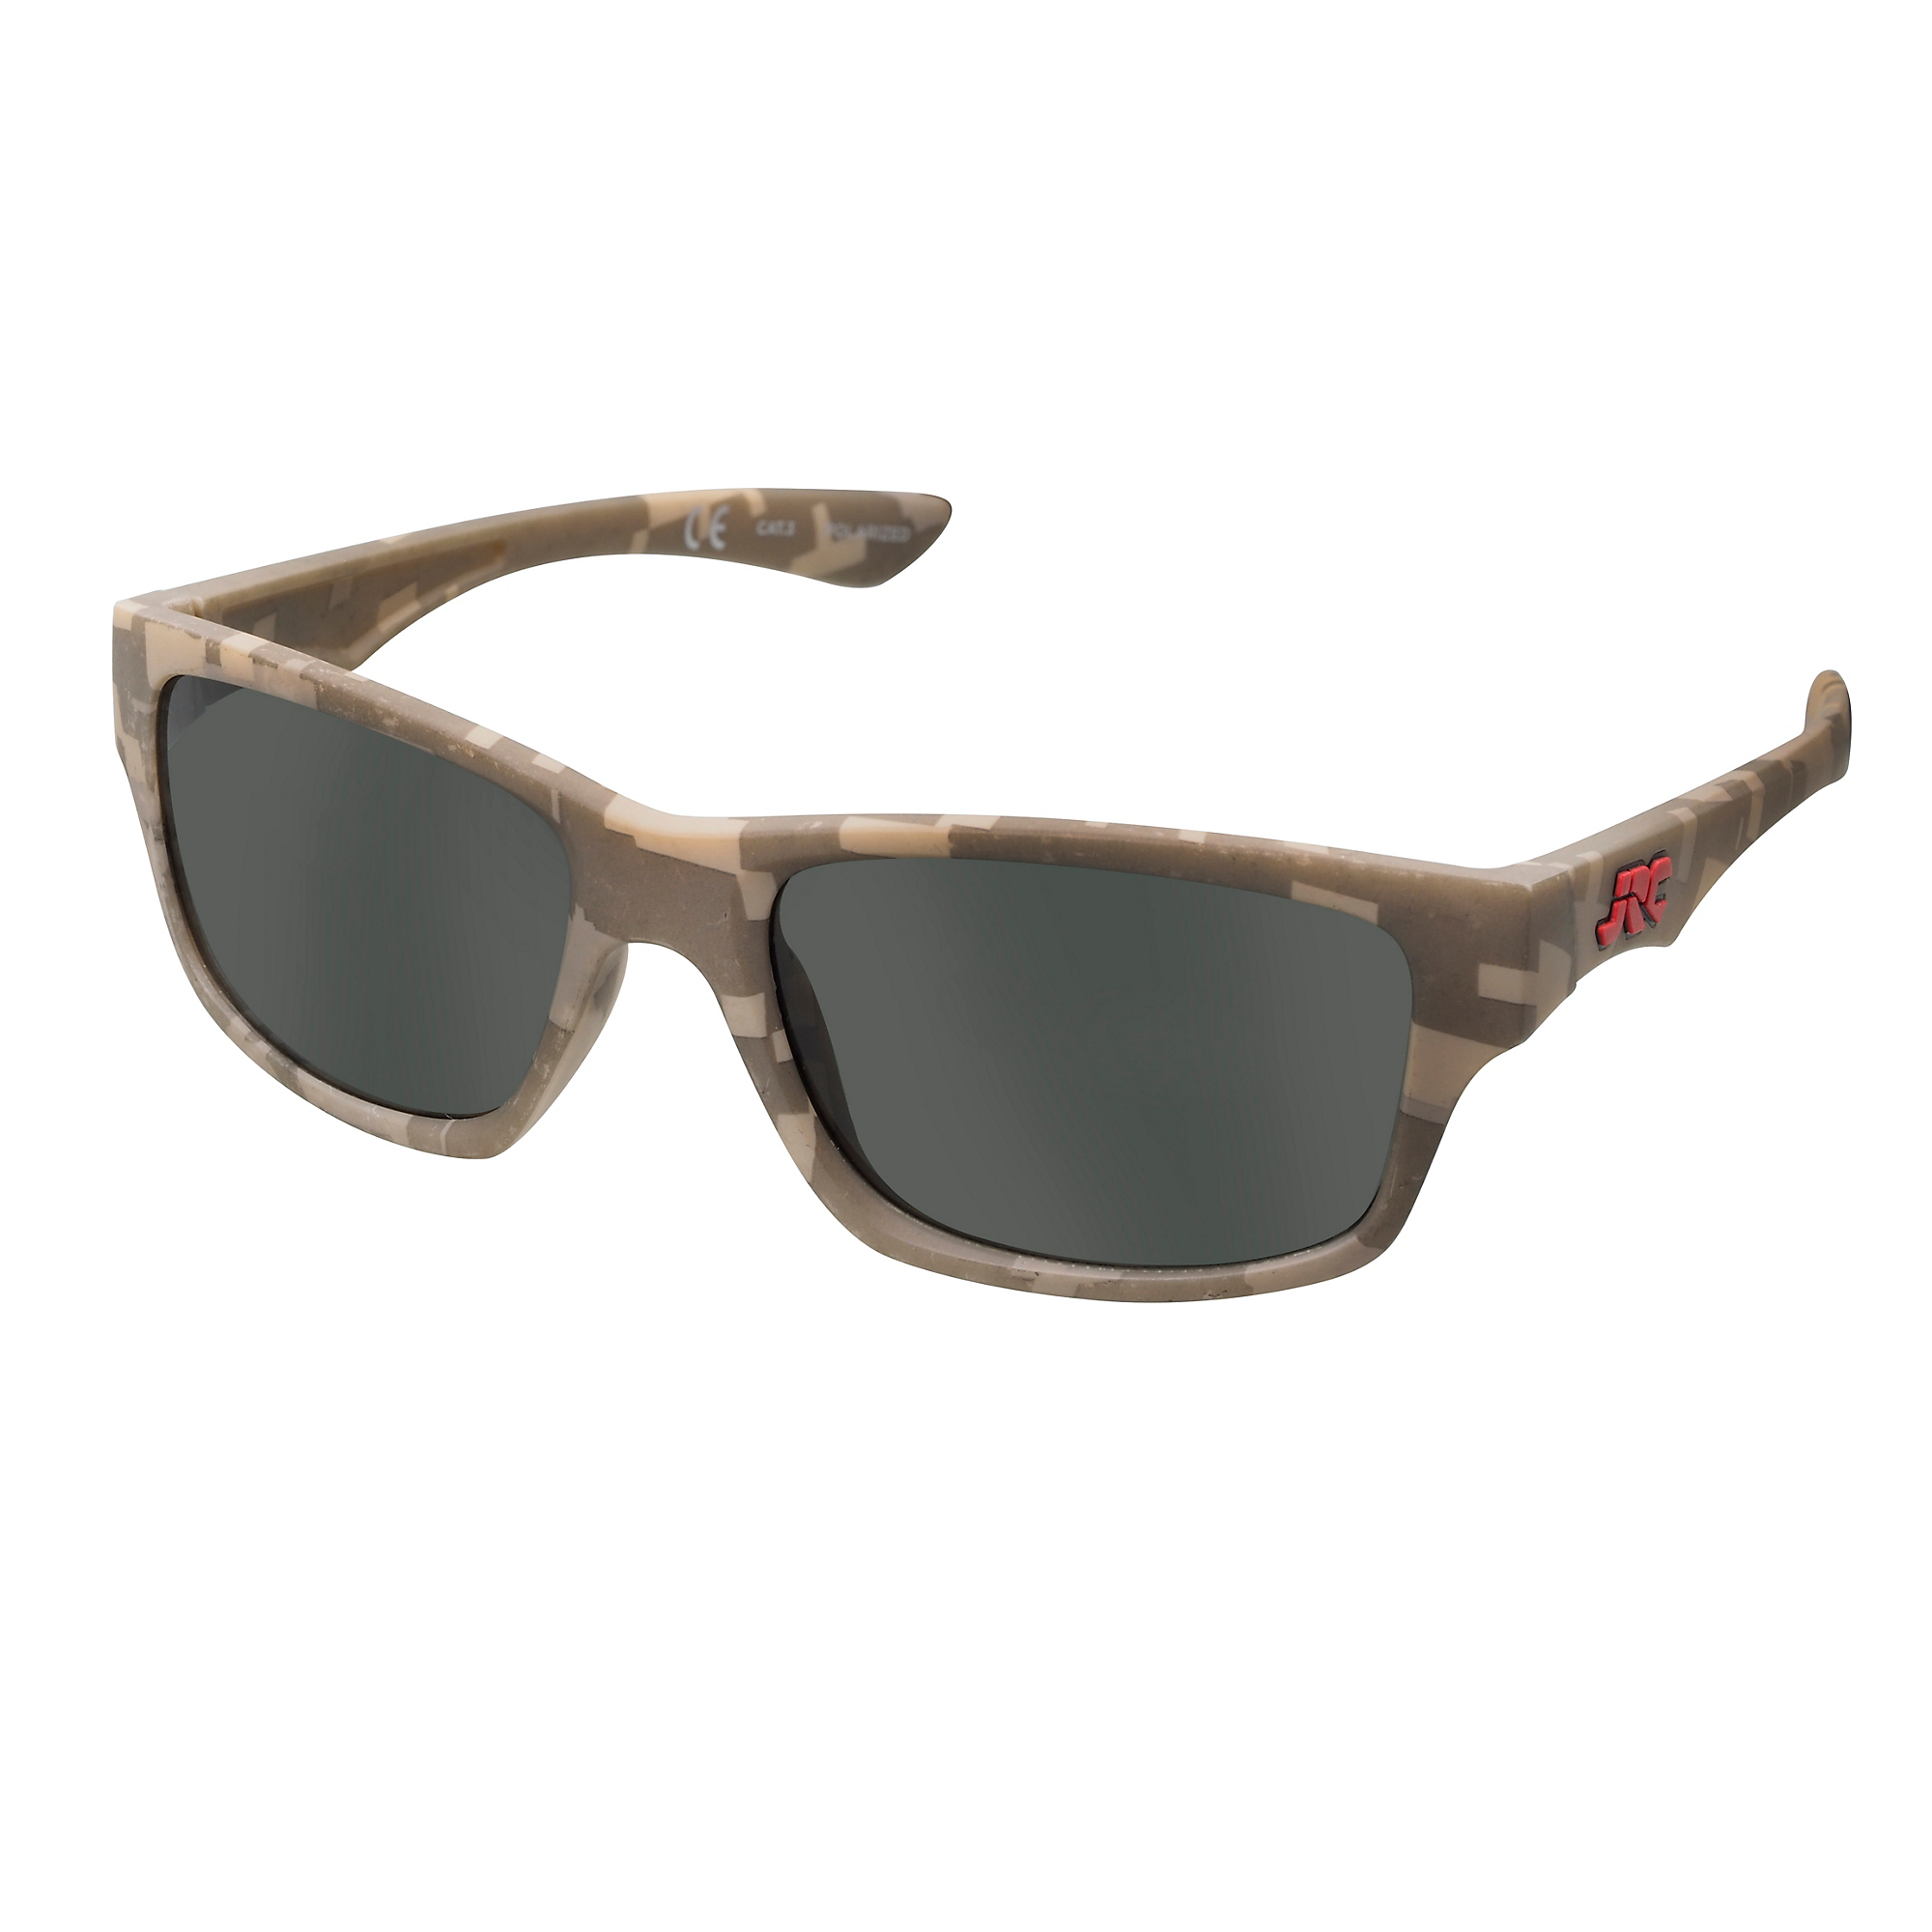 JRC Stealth Sunglasses - Digi Camo - Smoke